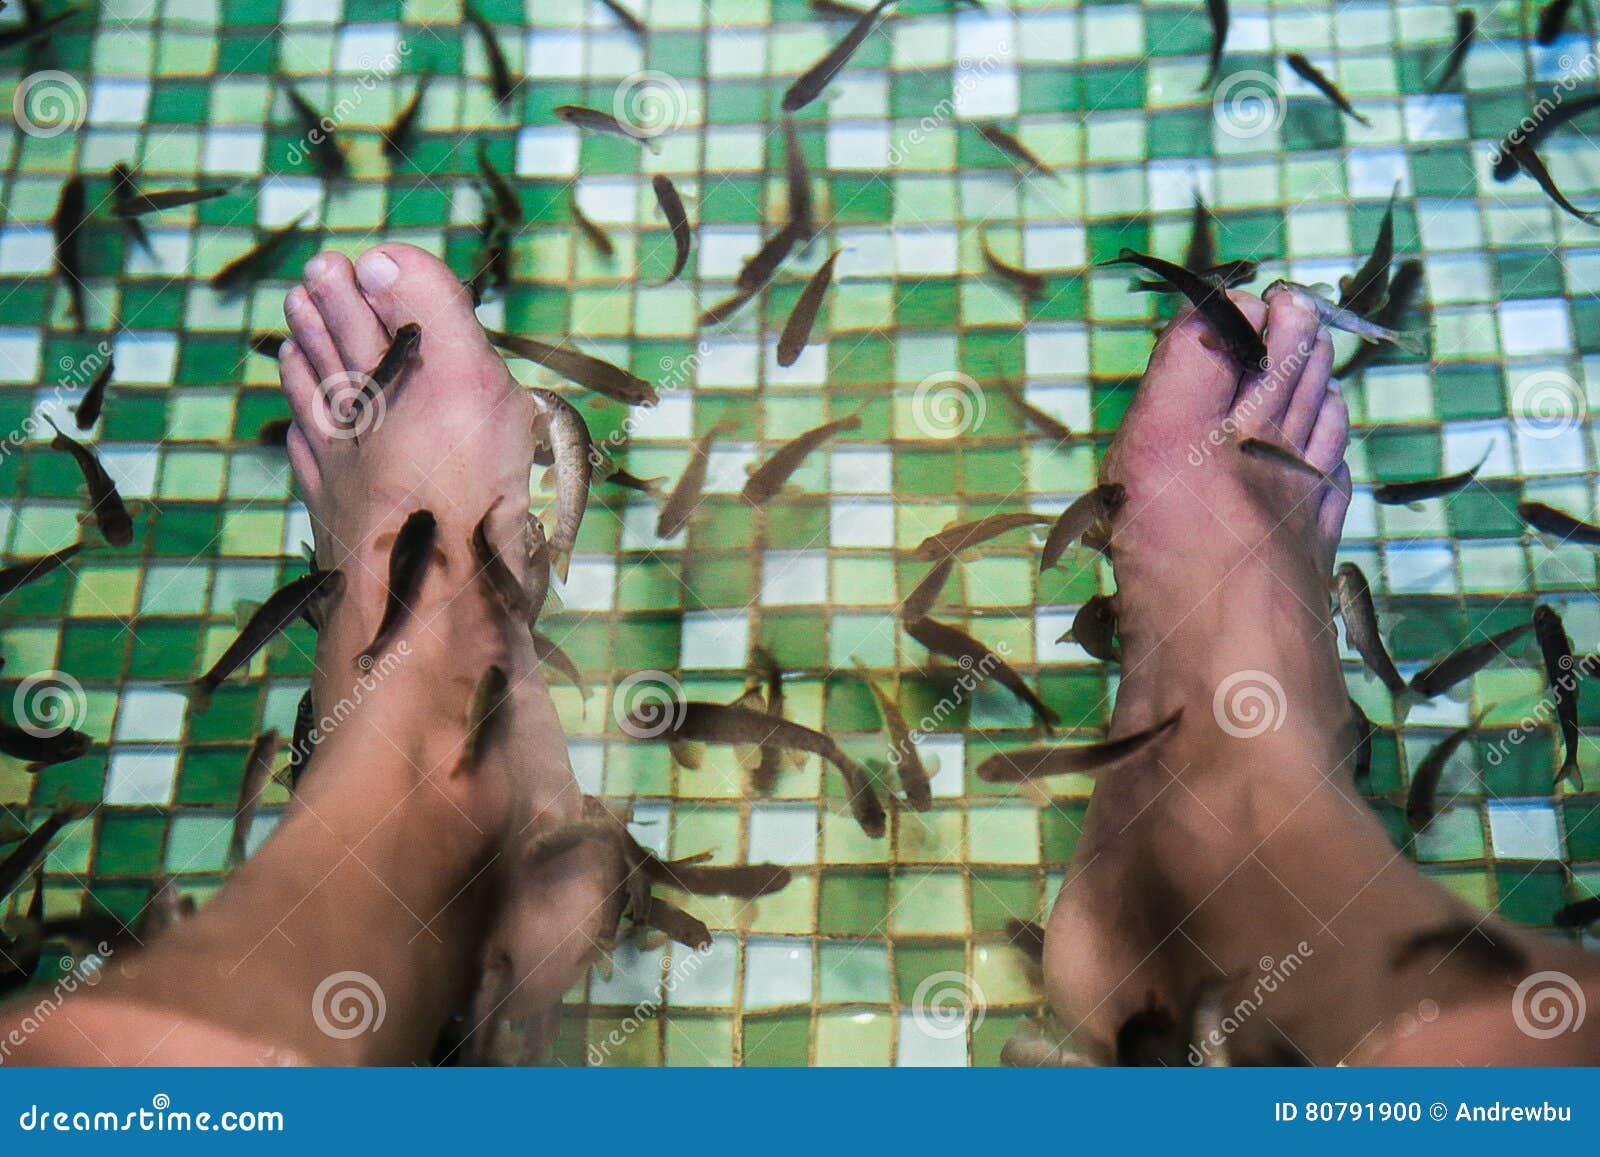 garra rufa, also called doctor fish eating skin on legs